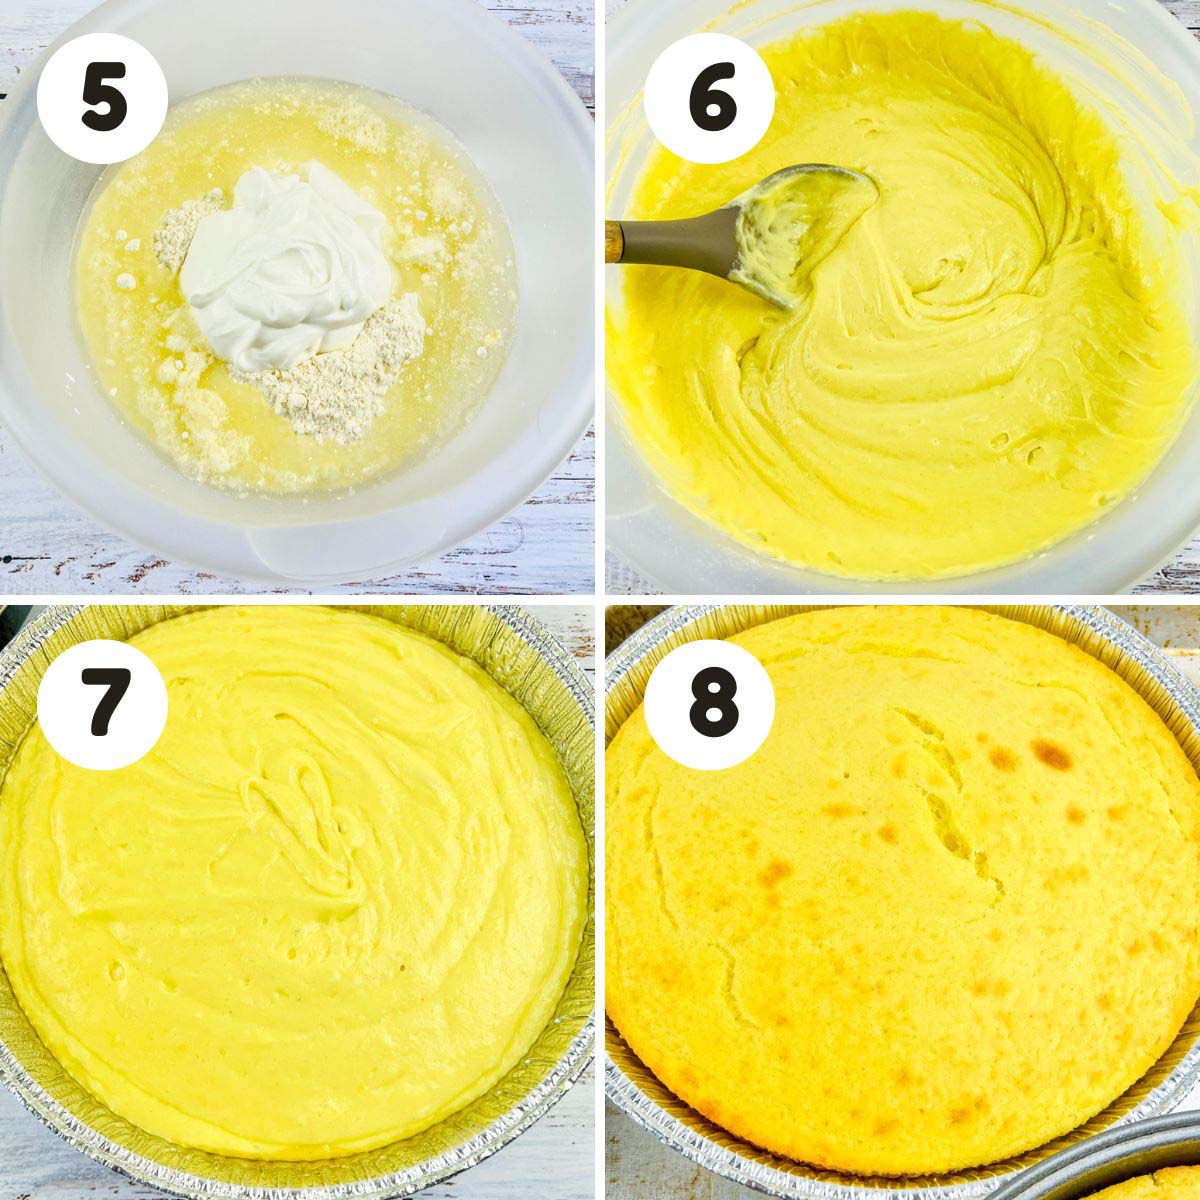 Steps to make the lemon cake.